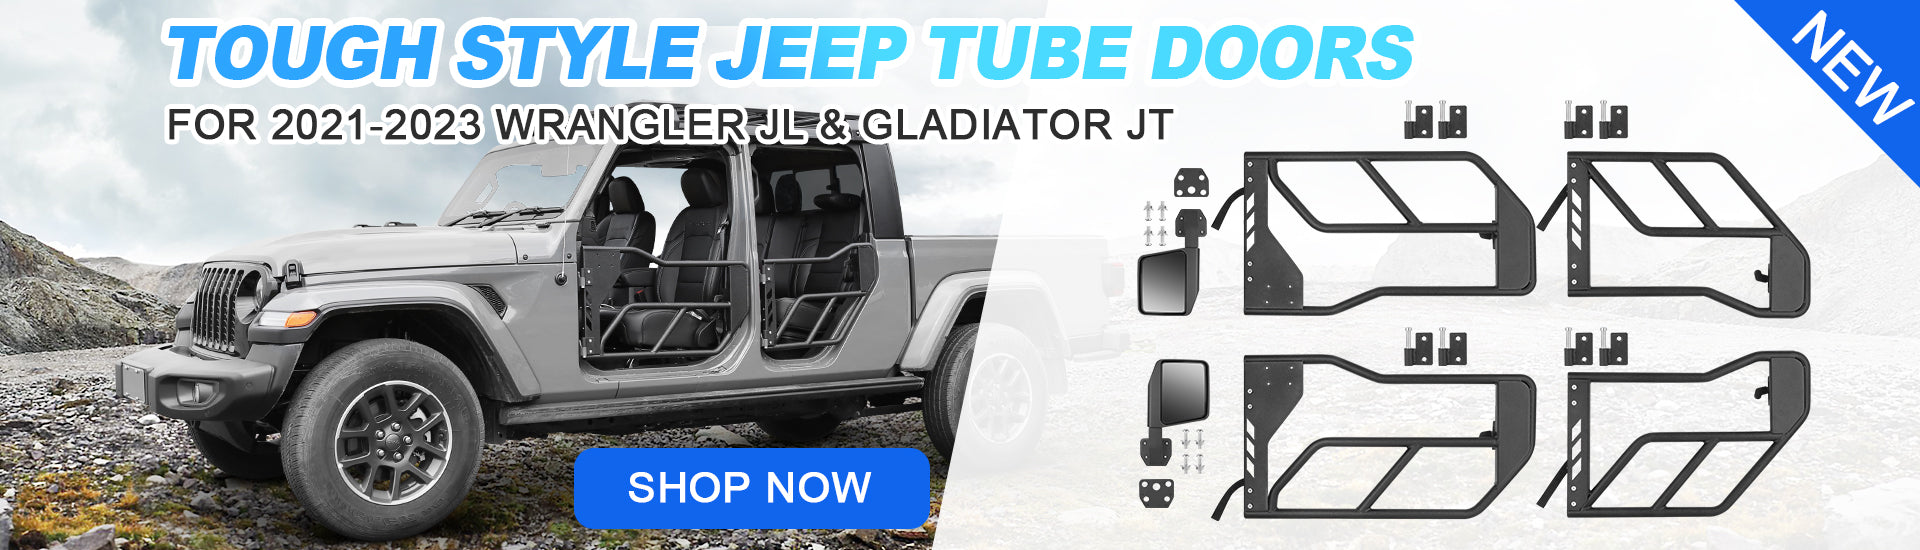 Jeep tube doors